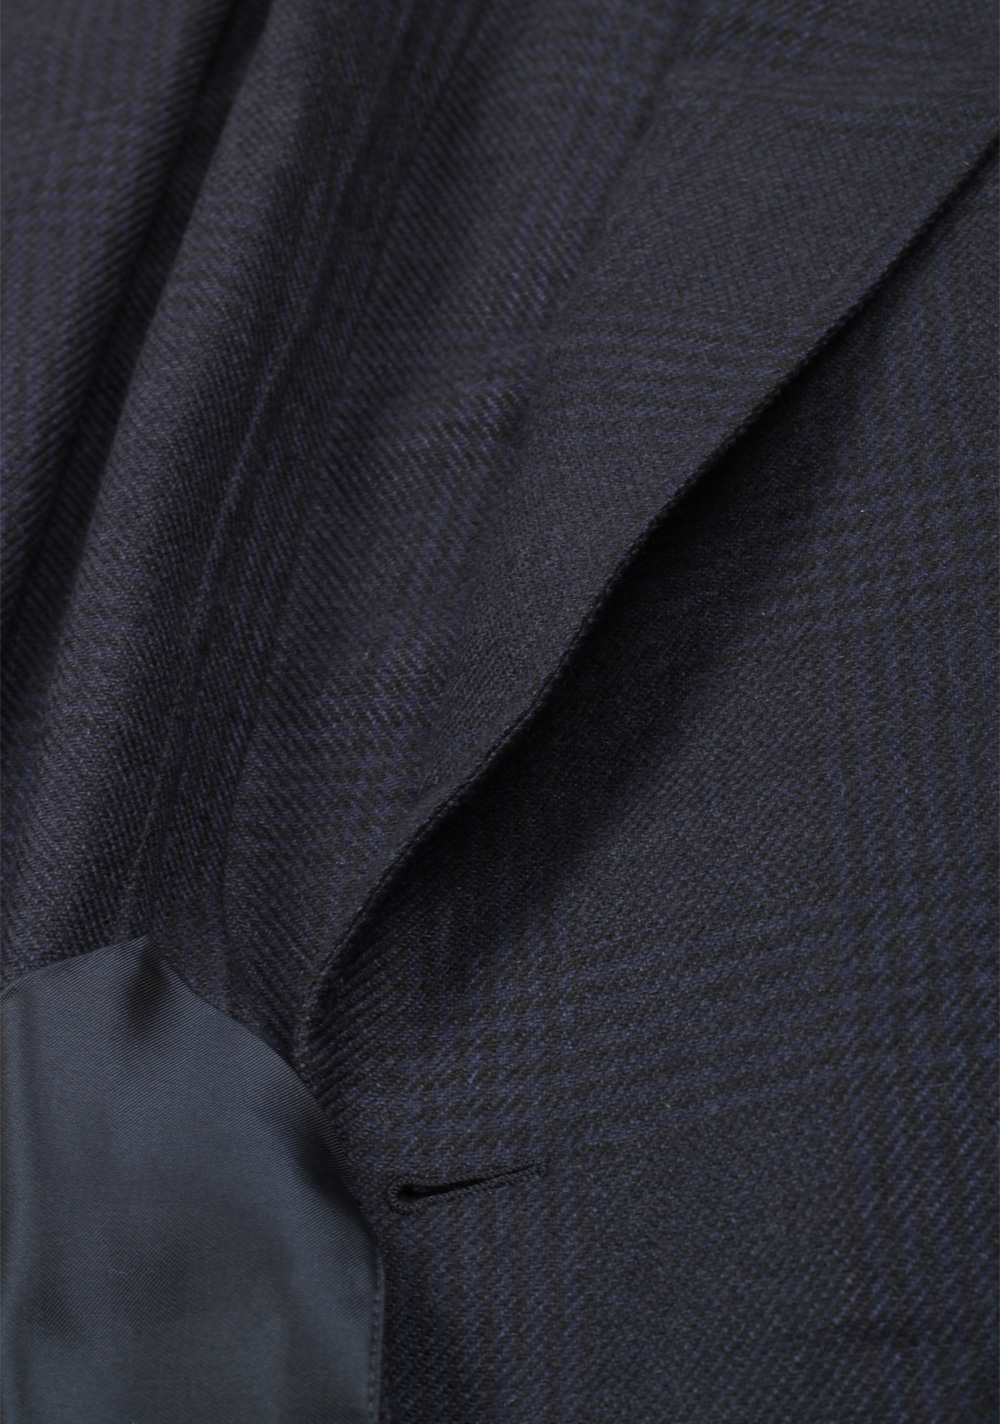 TOM FORD Shelton Blue Checked Sport Coat Size 54L / 44L U.S. | Costume Limité